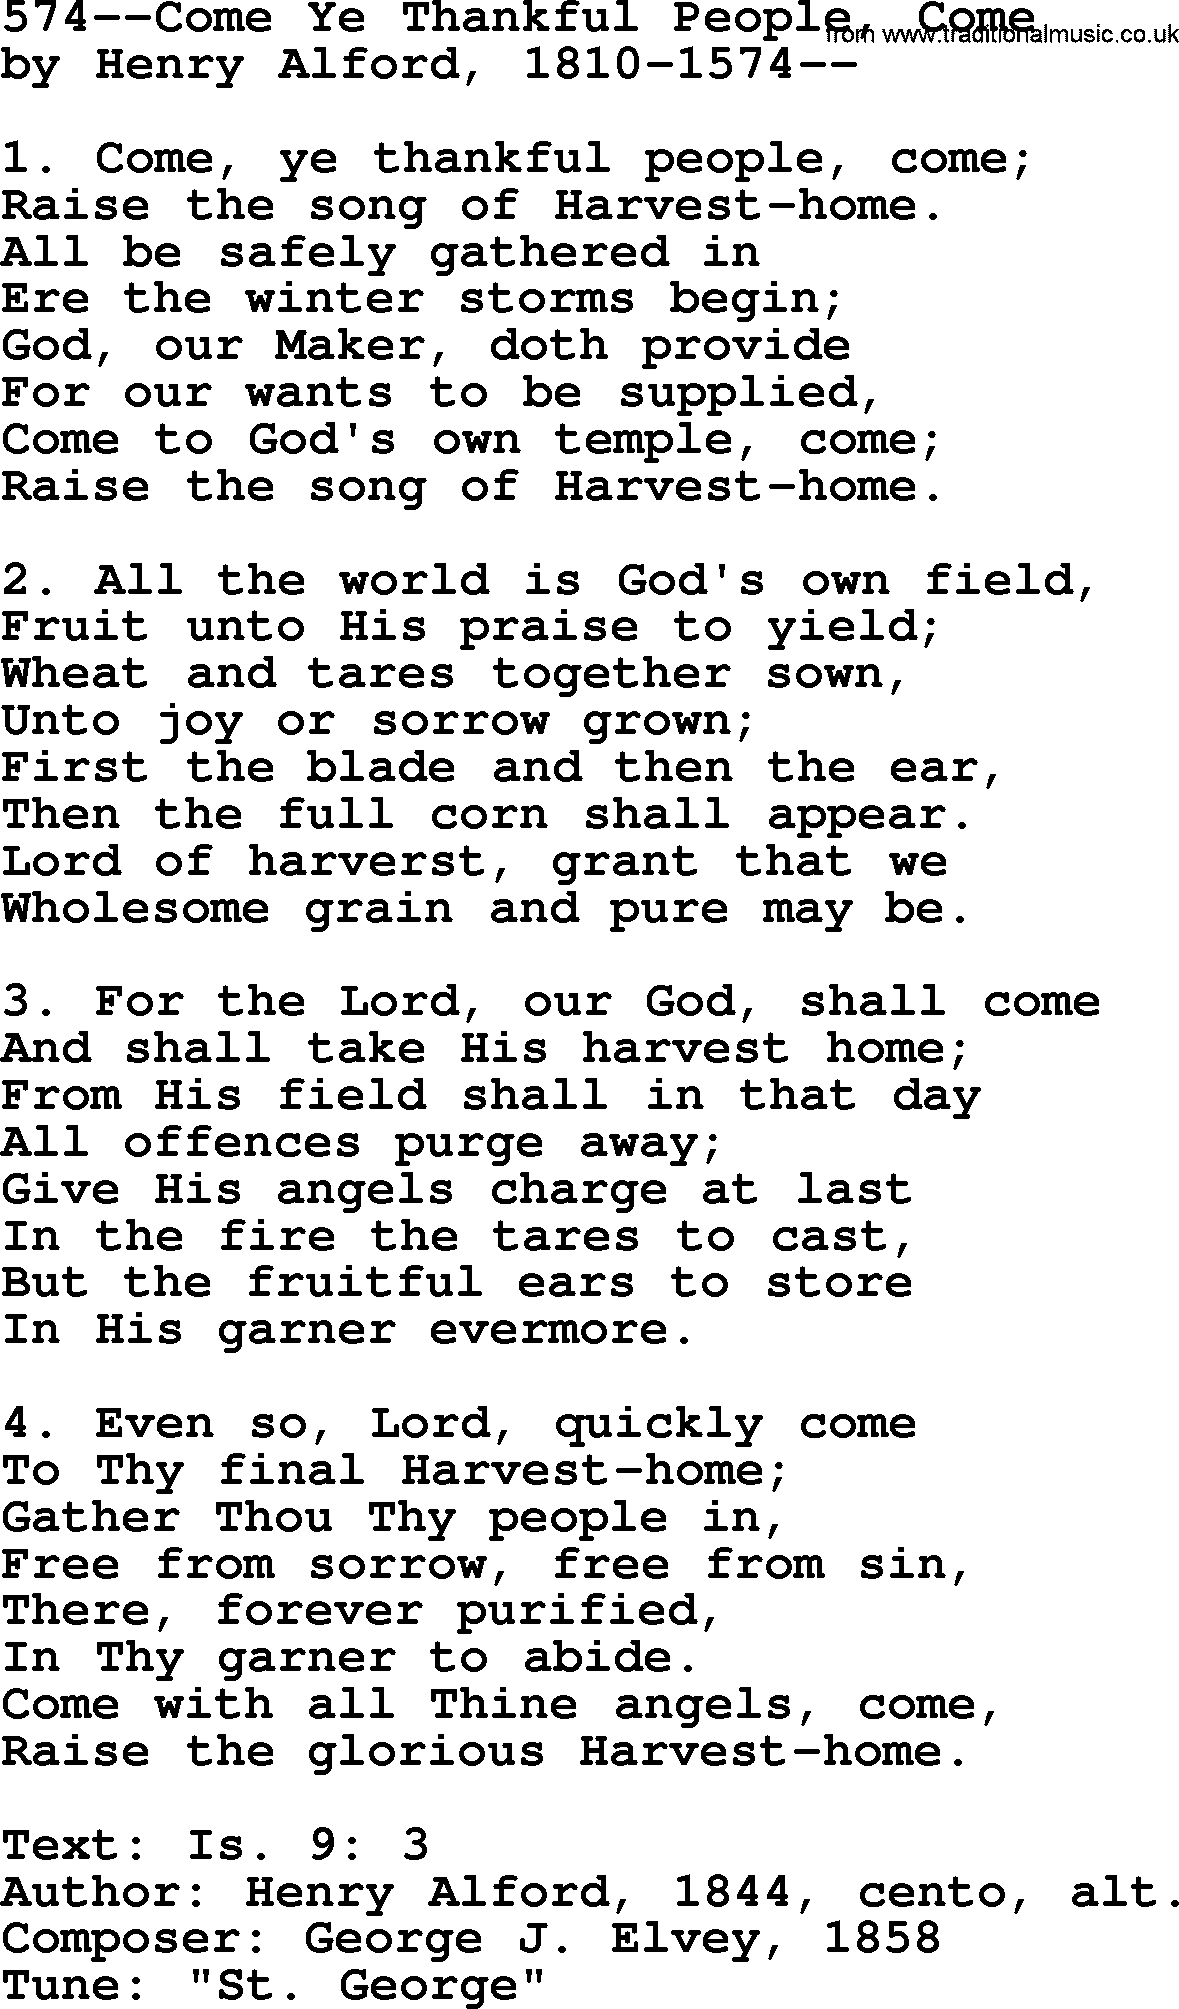 Lutheran Hymn: 574--Come Ye Thankful People, Come.txt lyrics with PDF